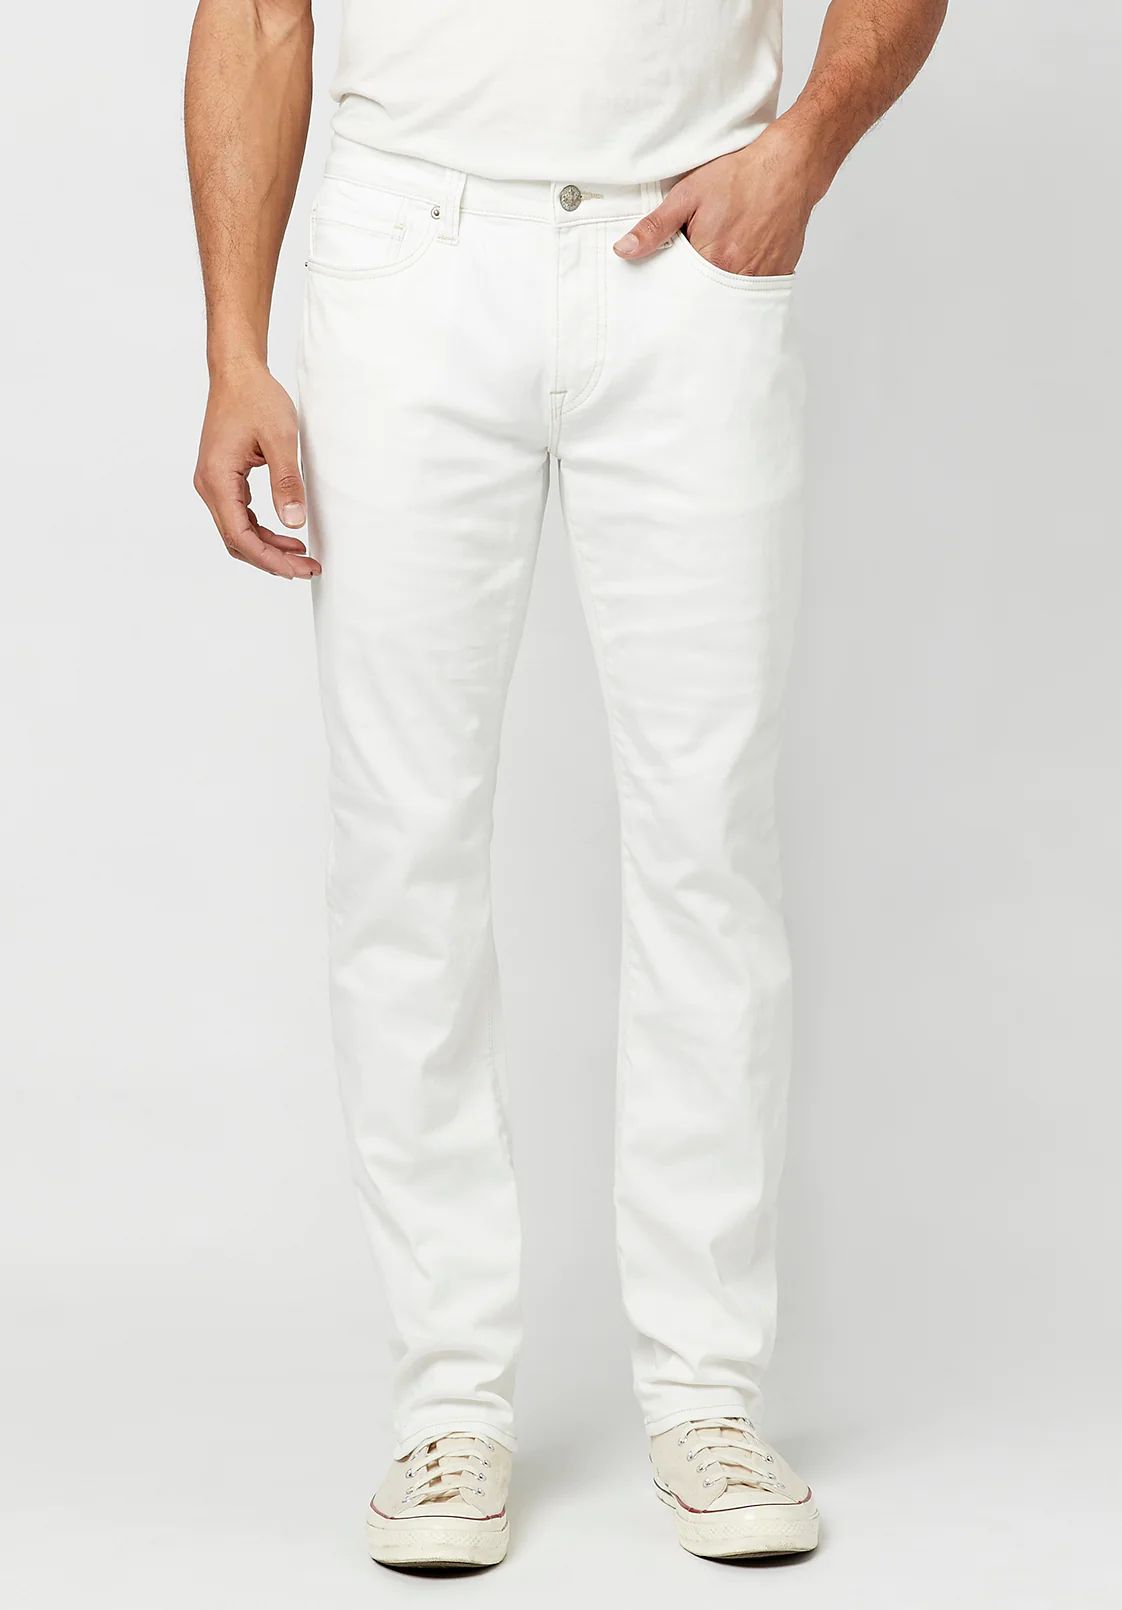 Straight Six Authentic Vintage White Jeans - BM22744 | Buffalo David Bitton